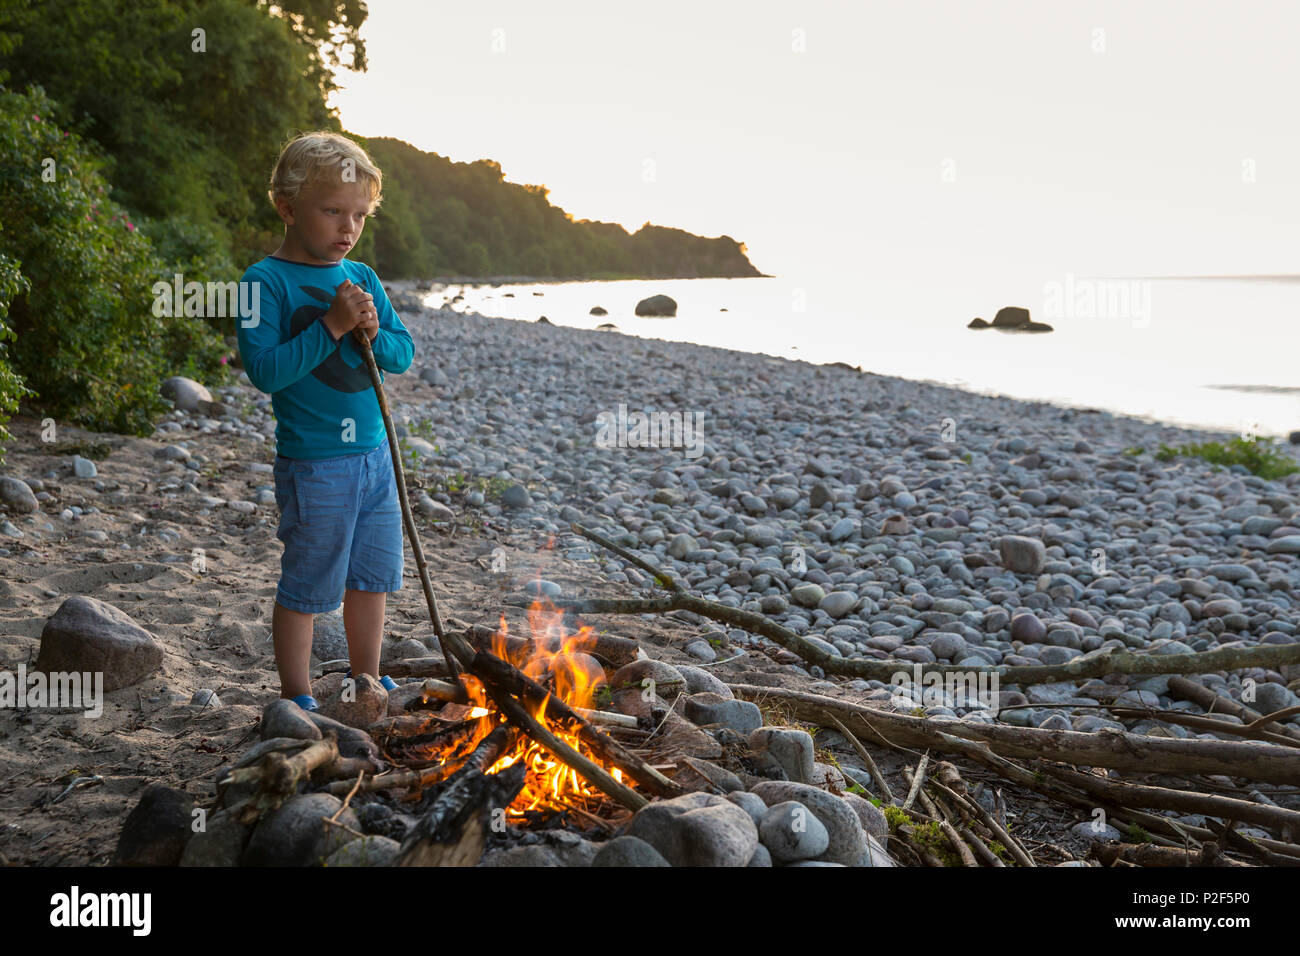 Boy, 5 years old, standing near the campfire, child, Adventure, Baltic sea, MR, Bornholm, near Gudhjem, Denmark, Europe Stock Photo